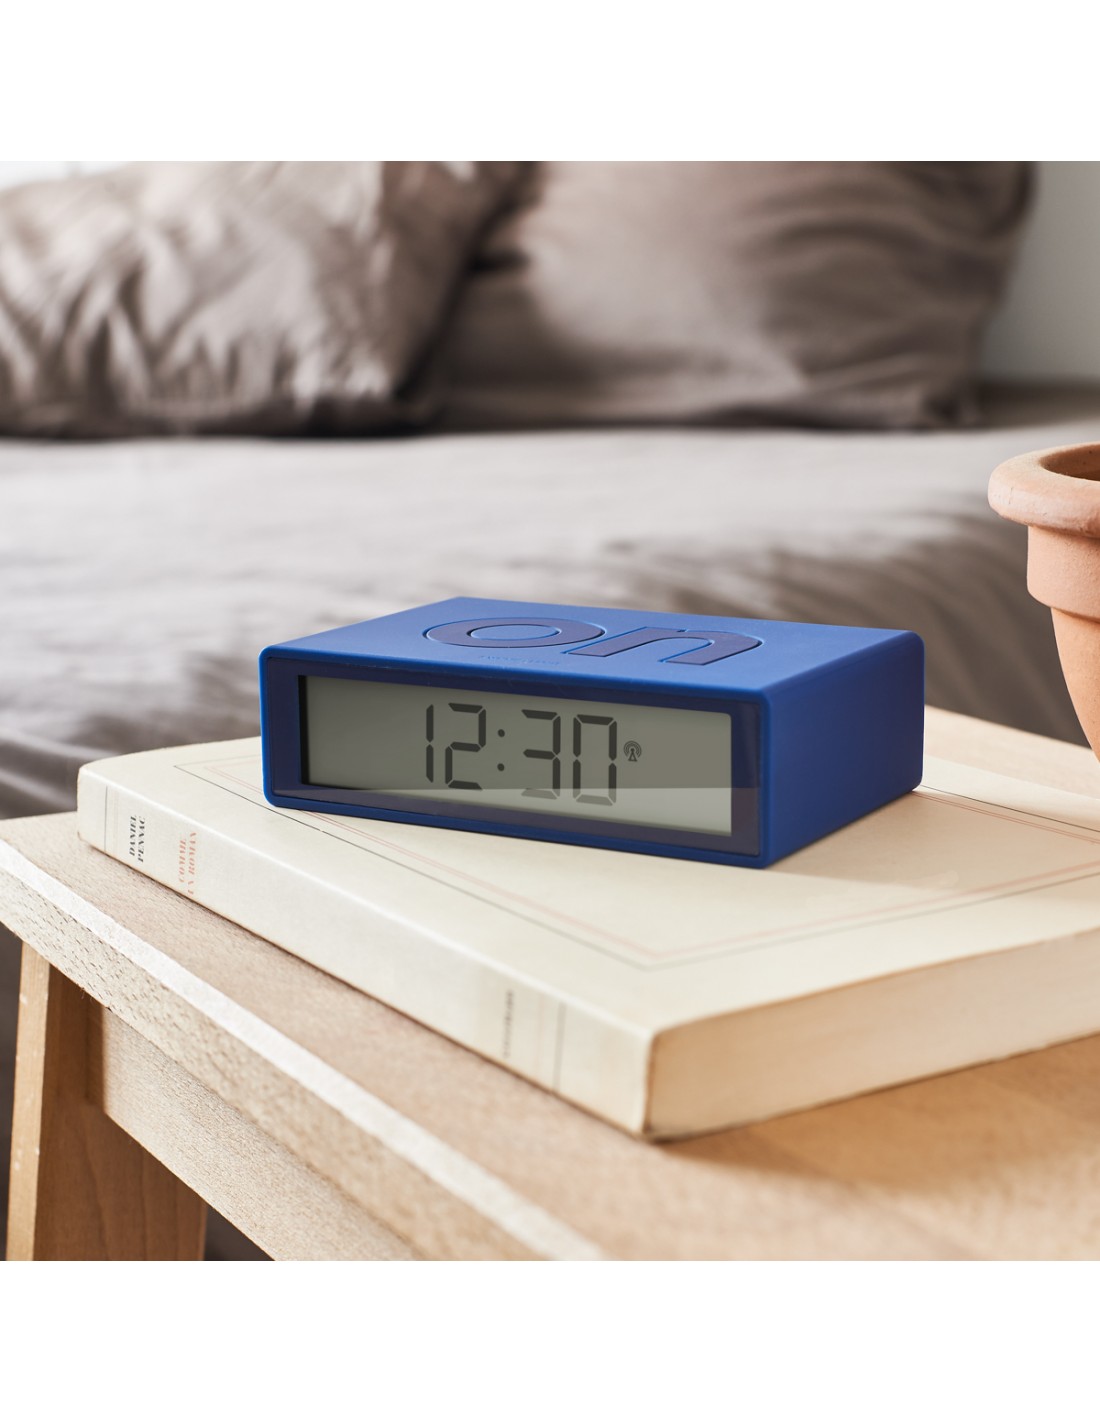 Lexon Flip + - Reversible LCD alarm clock radio-controlled clock